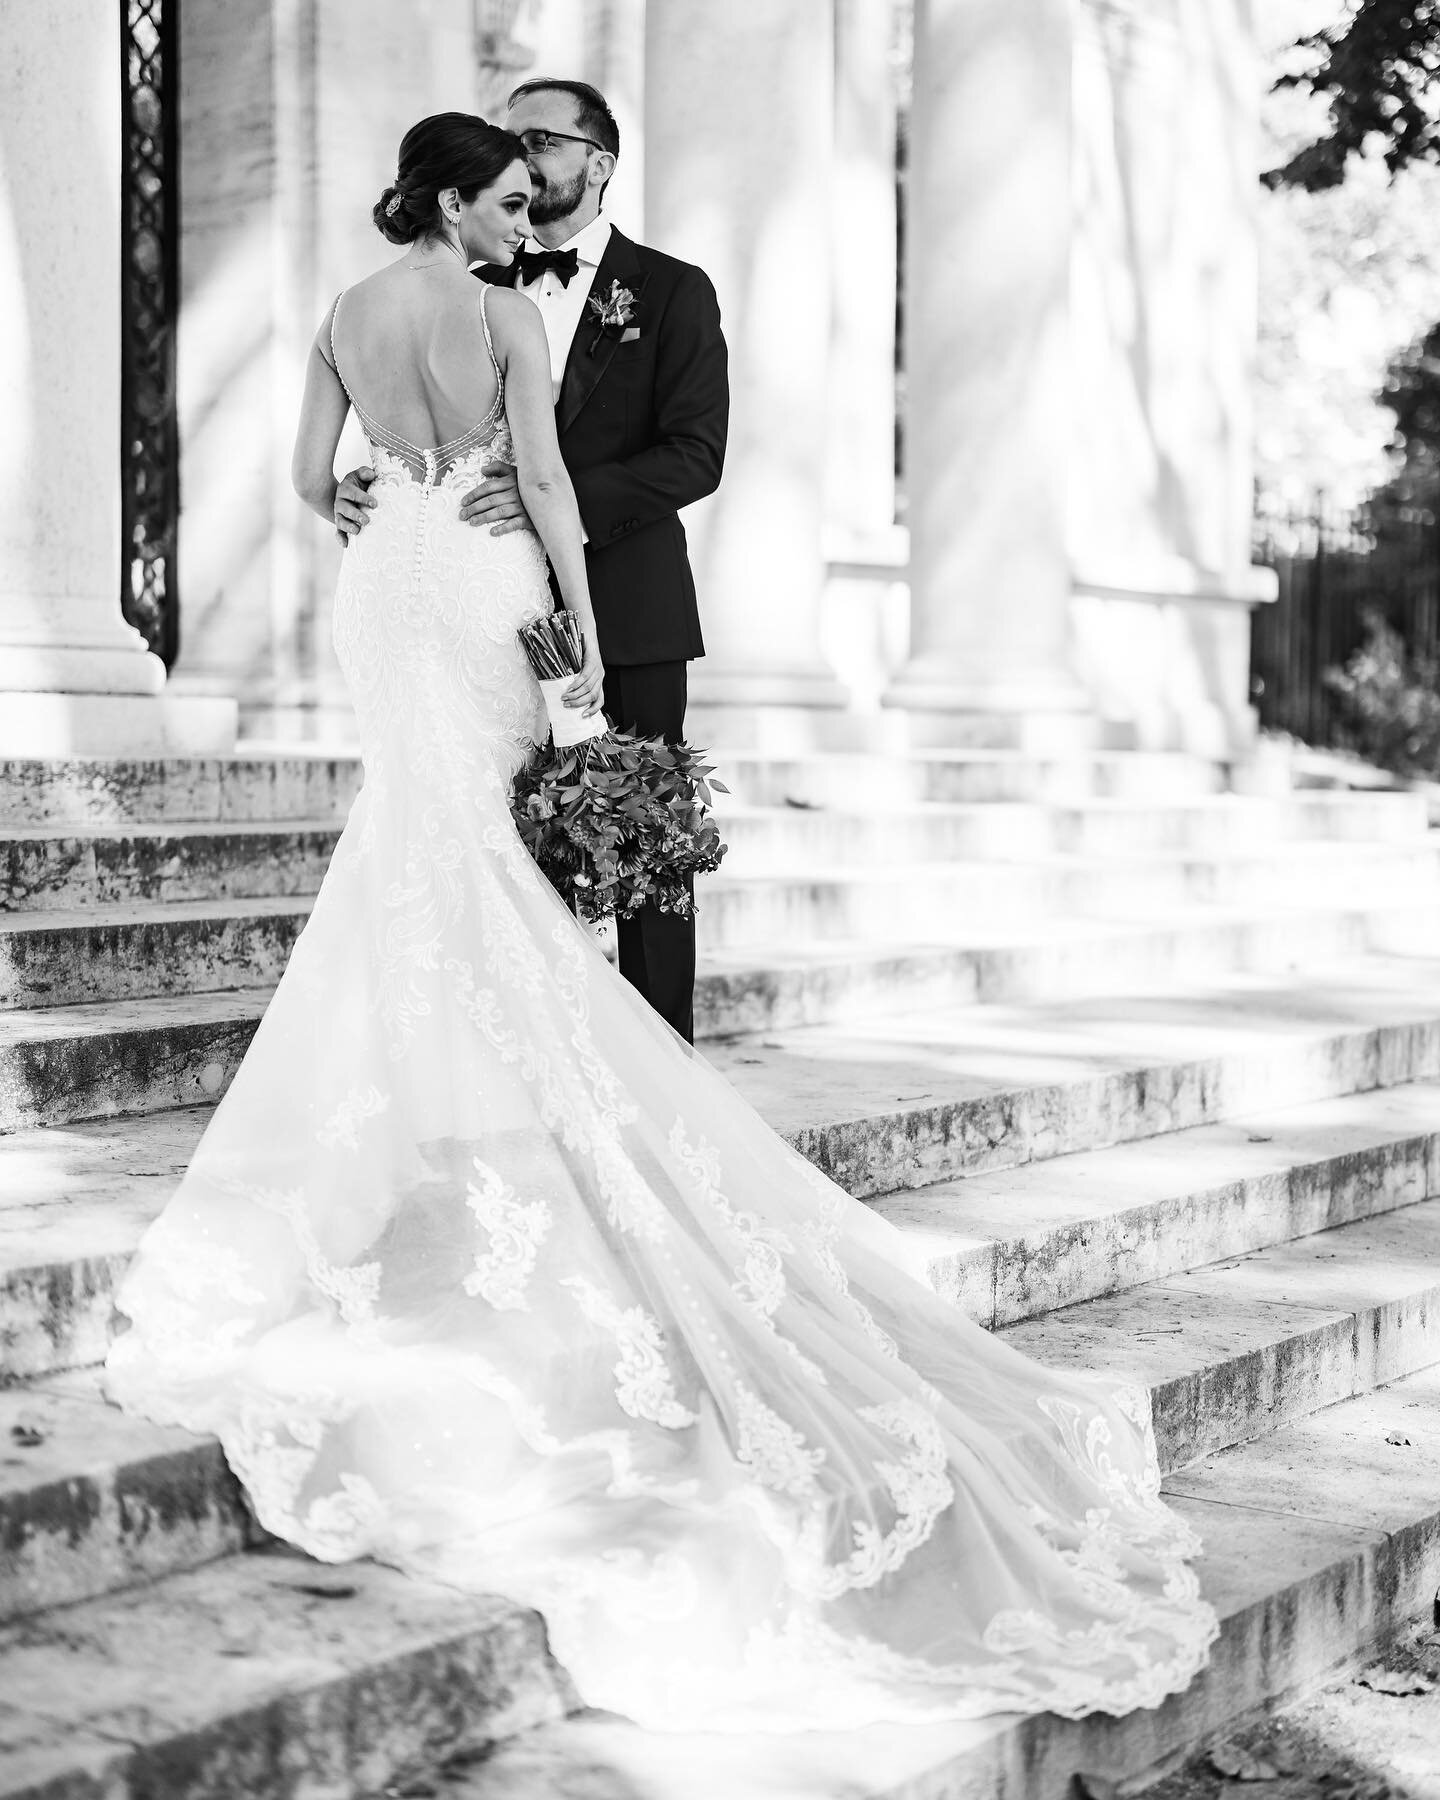 Stepping into a lifetime of love 💕 

@hitchedbytbp 
@mu8bridalbeauty 
@beautifulbloomsevents 
@franklininstitute 
@seravezzaevents 
.
.
.
.
#phillybride #phillybridetobe #modernluxuryweddings #brideinspiration #bridetobe #luxury #weddingday #wedding